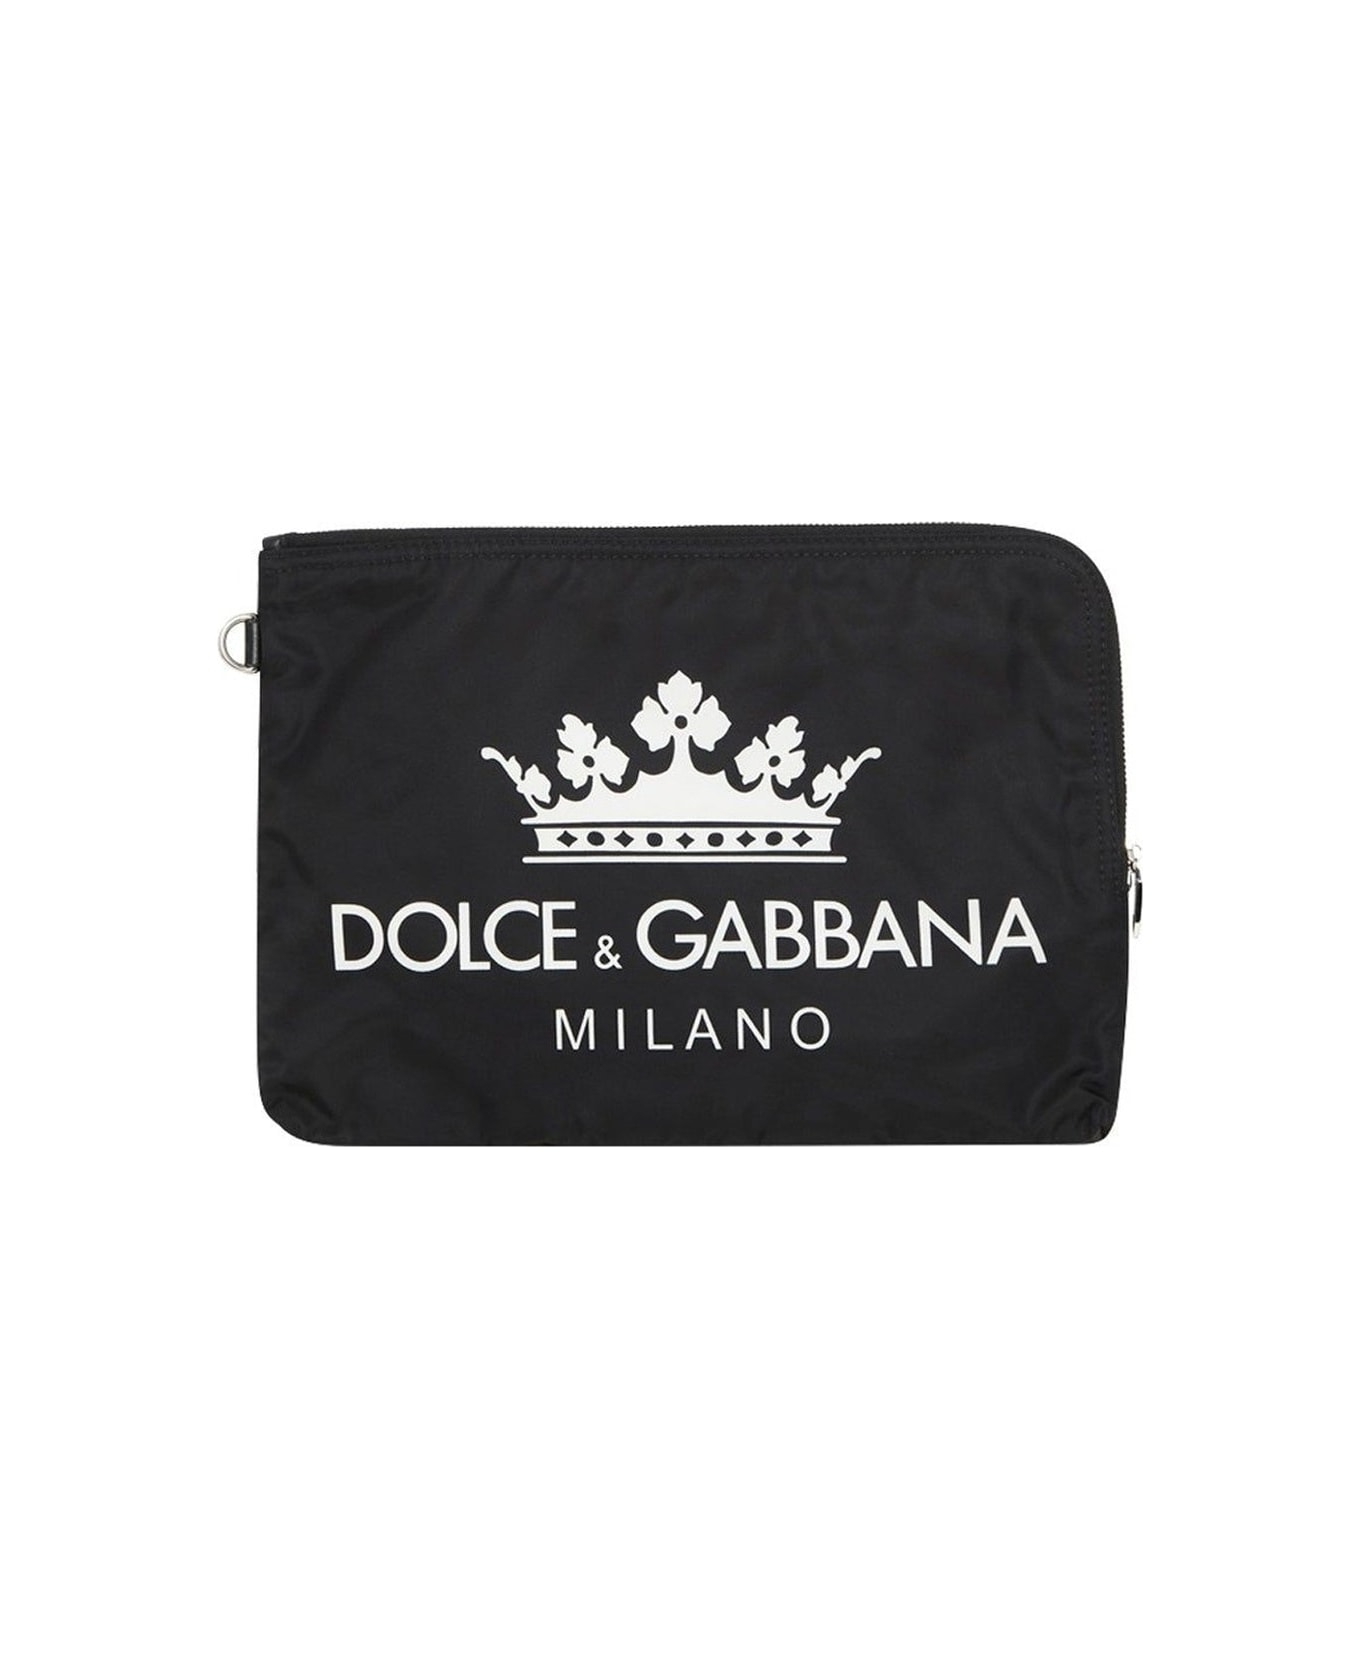 Dolce & Gabbana Logo Clutch - Black